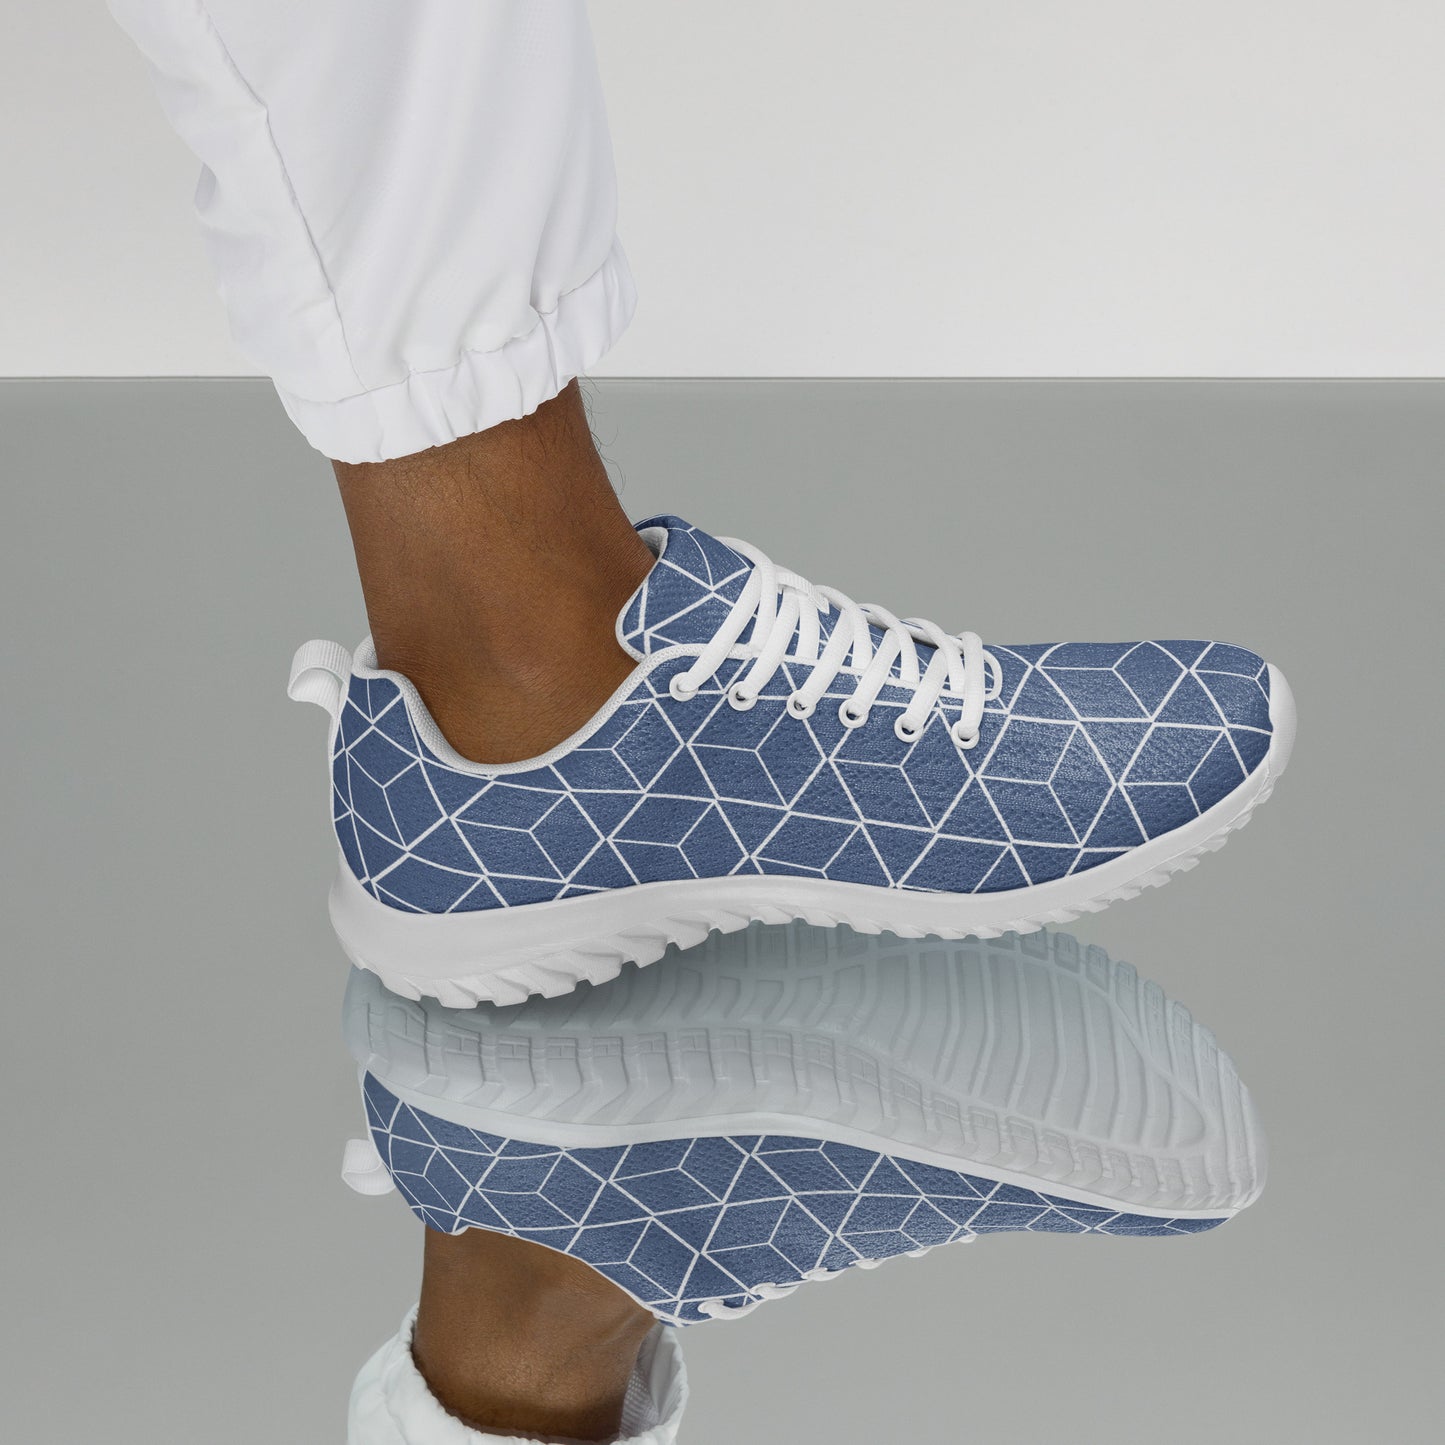 DASH Geo Kashmir Blue Men’s Athletic Shoes Lightweight Breathable Design by IOBI Original Apparel